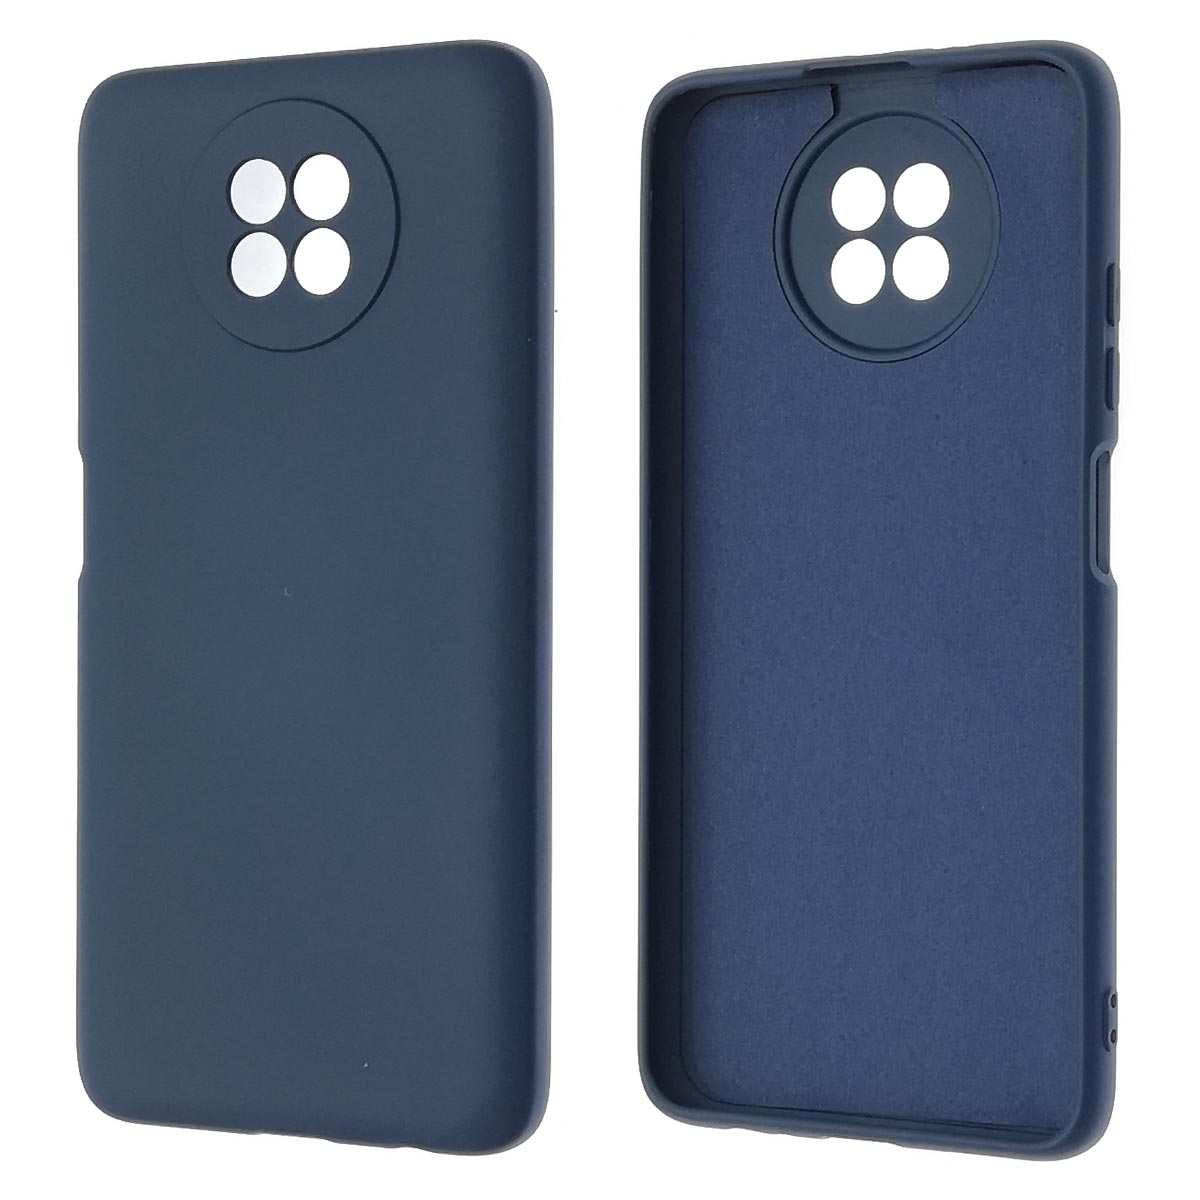 Чехол накладка Silicon Cover для XIAOMI Redmi Note 9T, силикон, бархат, цвет синий кобальт